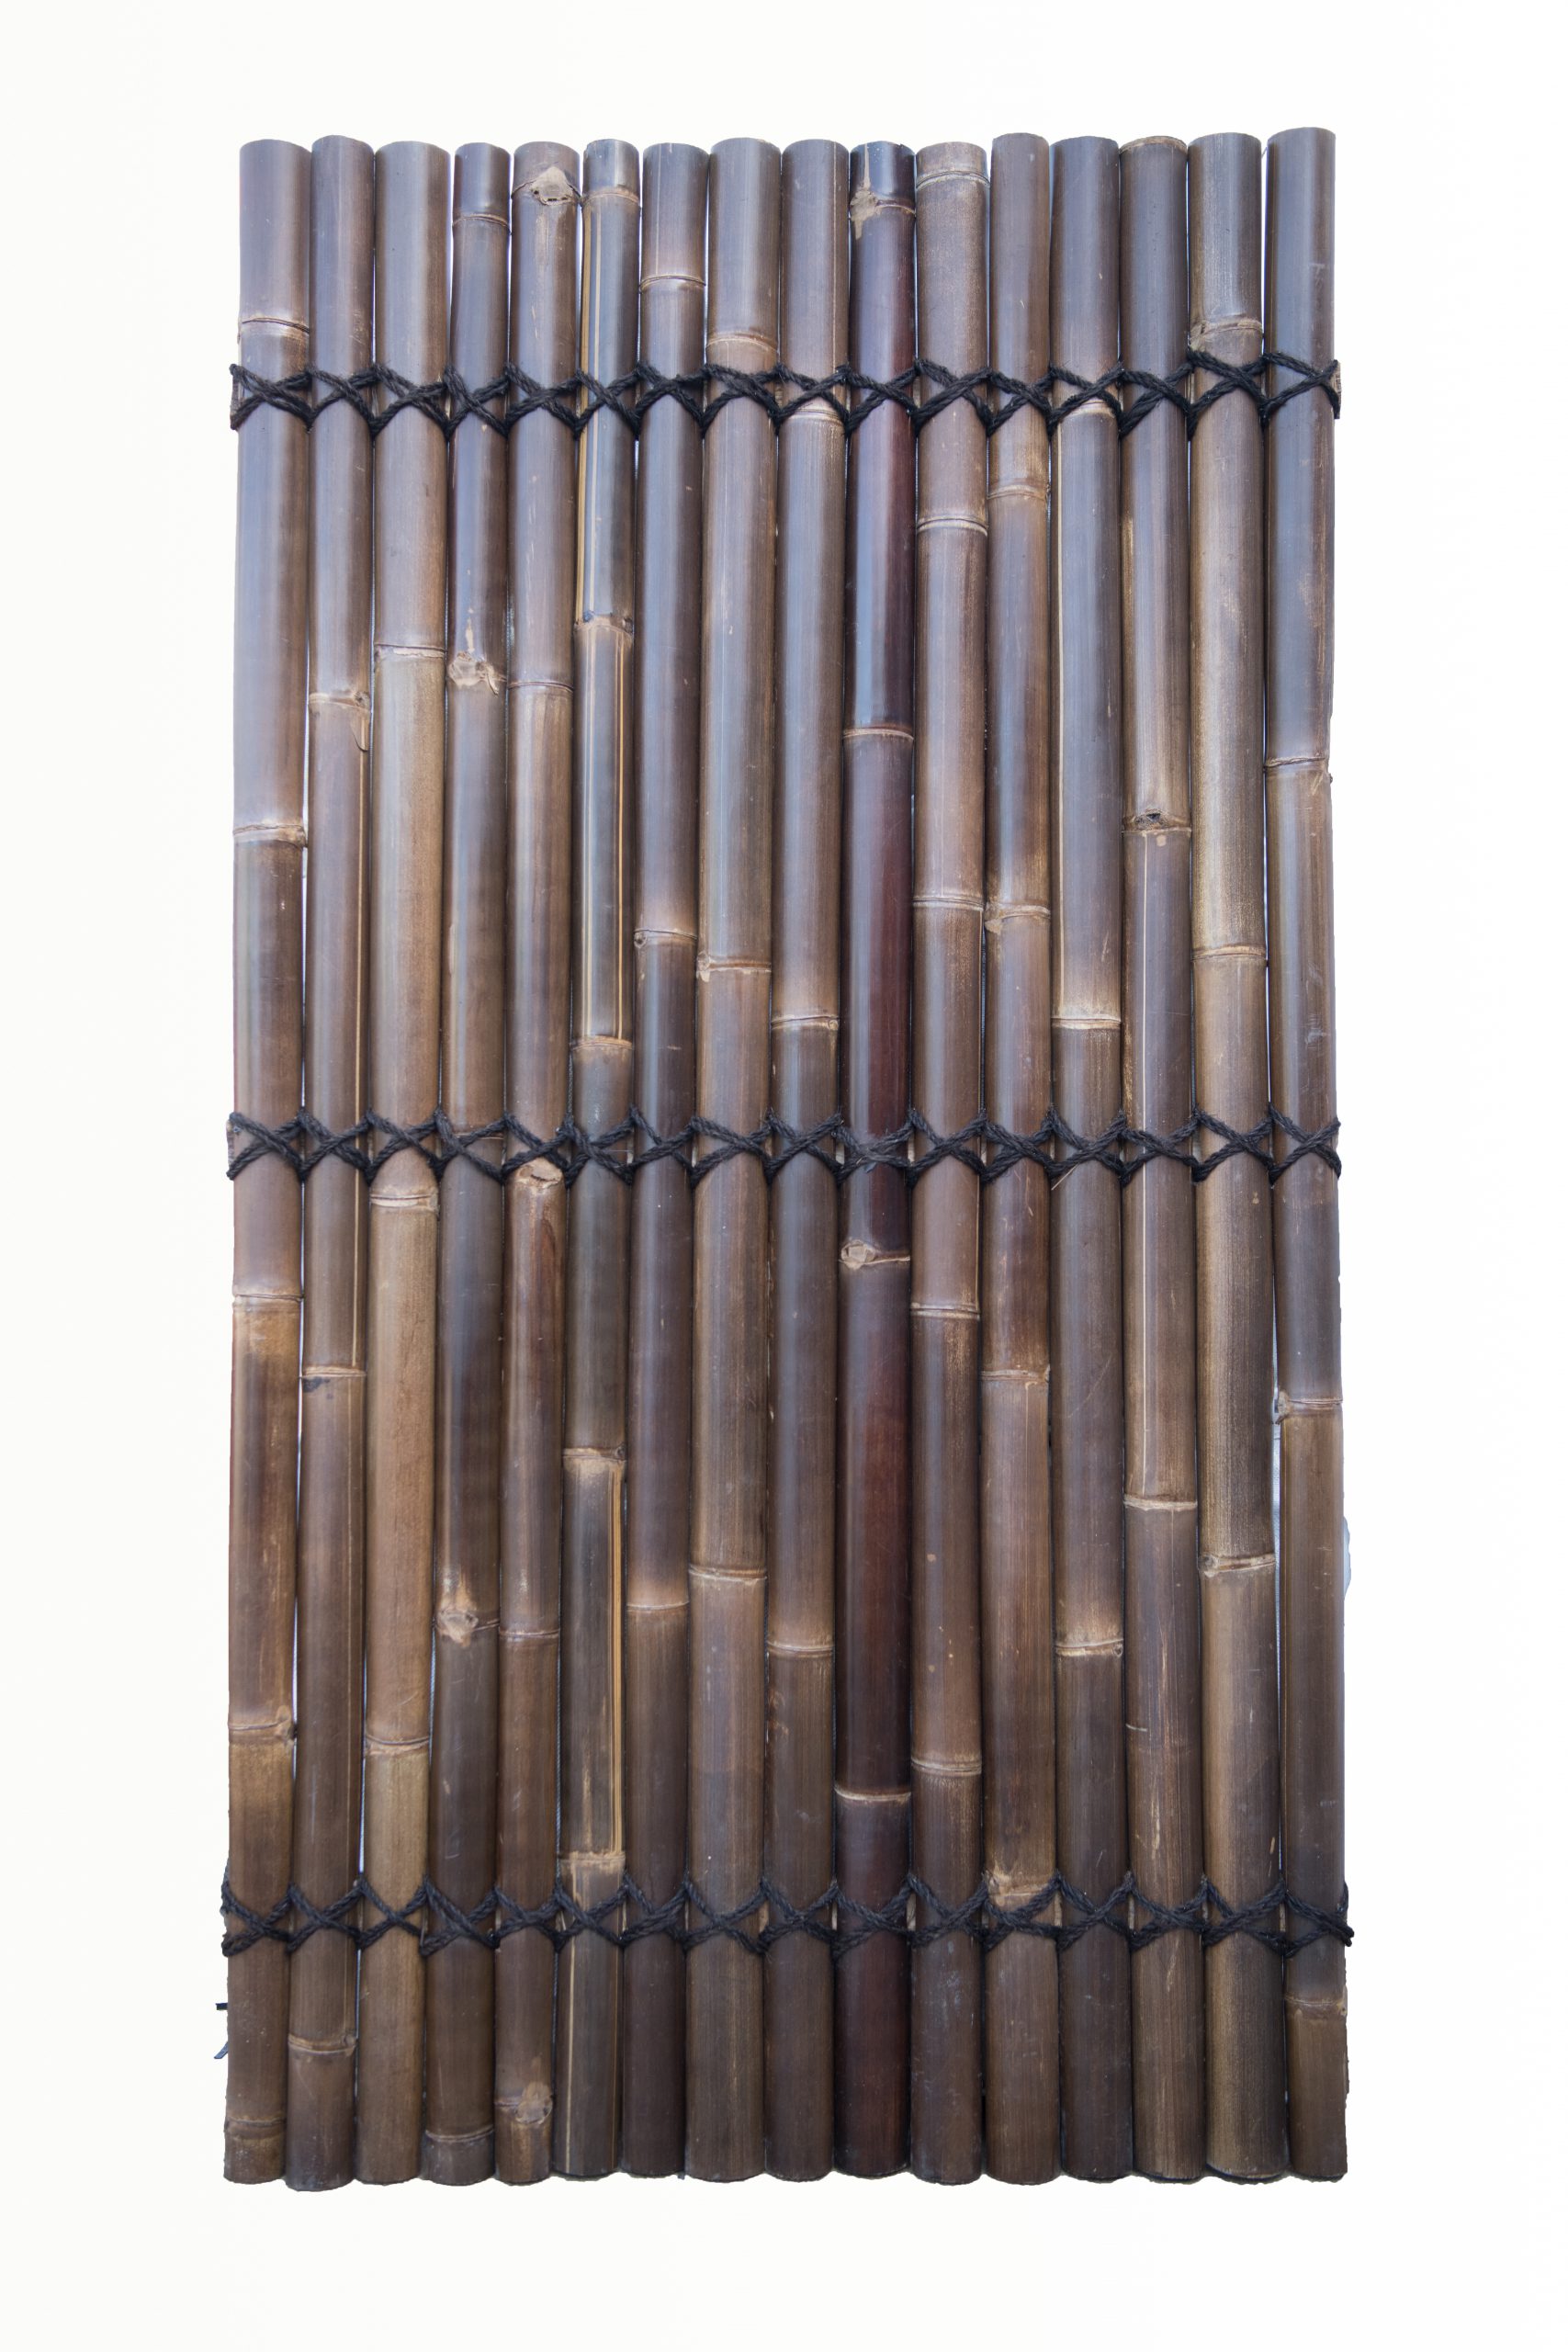 Bamboo Panels 1.8m X 1m